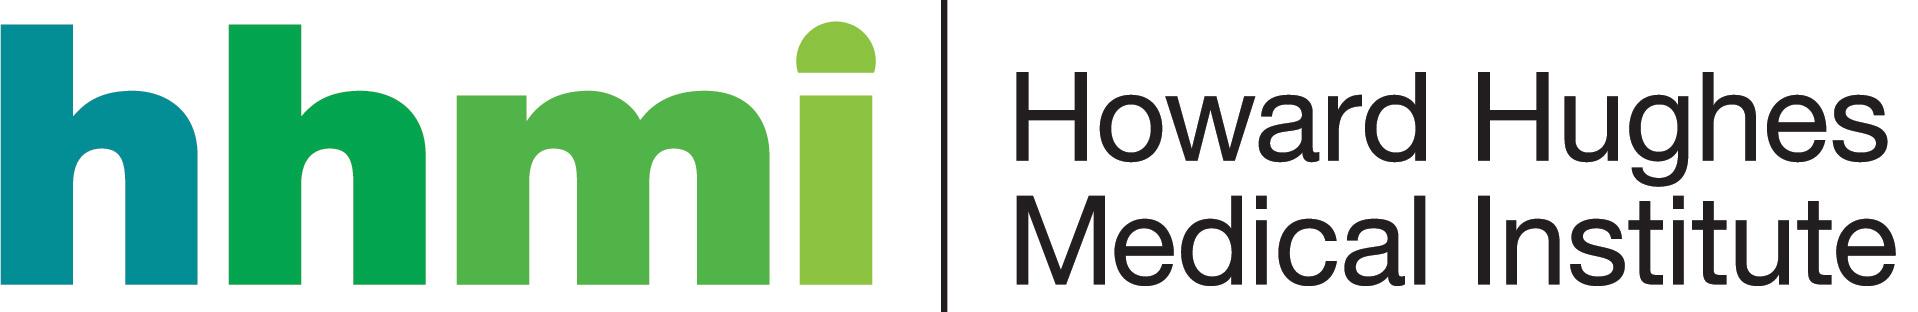 HHMI horizontal logo